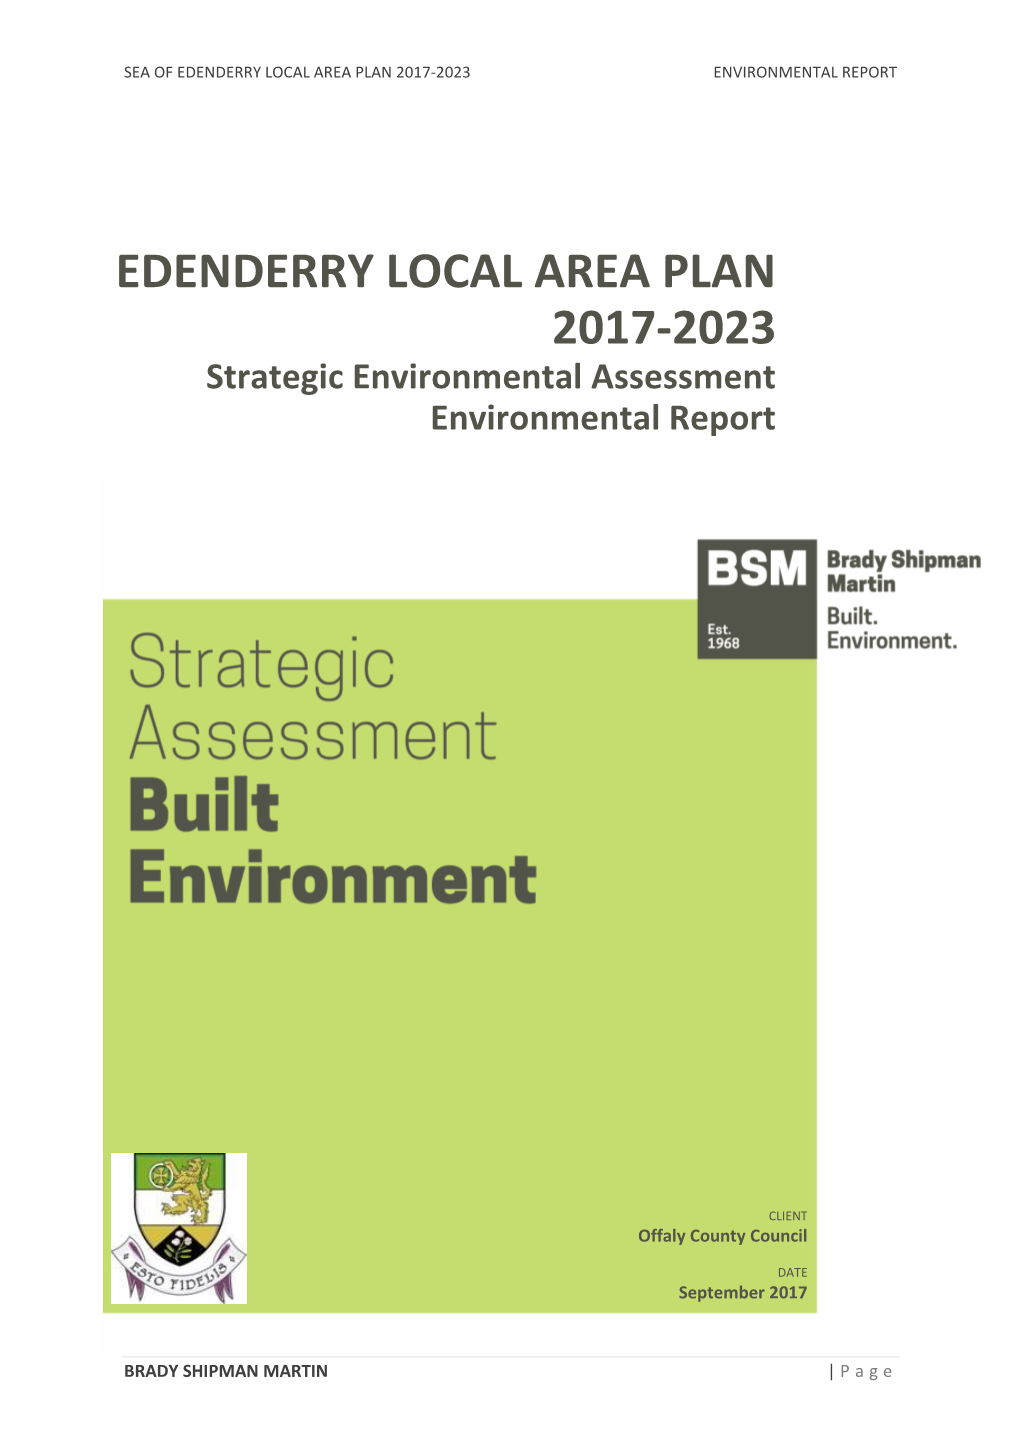 Edenderry Local Area Plan 2017-2023 Environmental Report